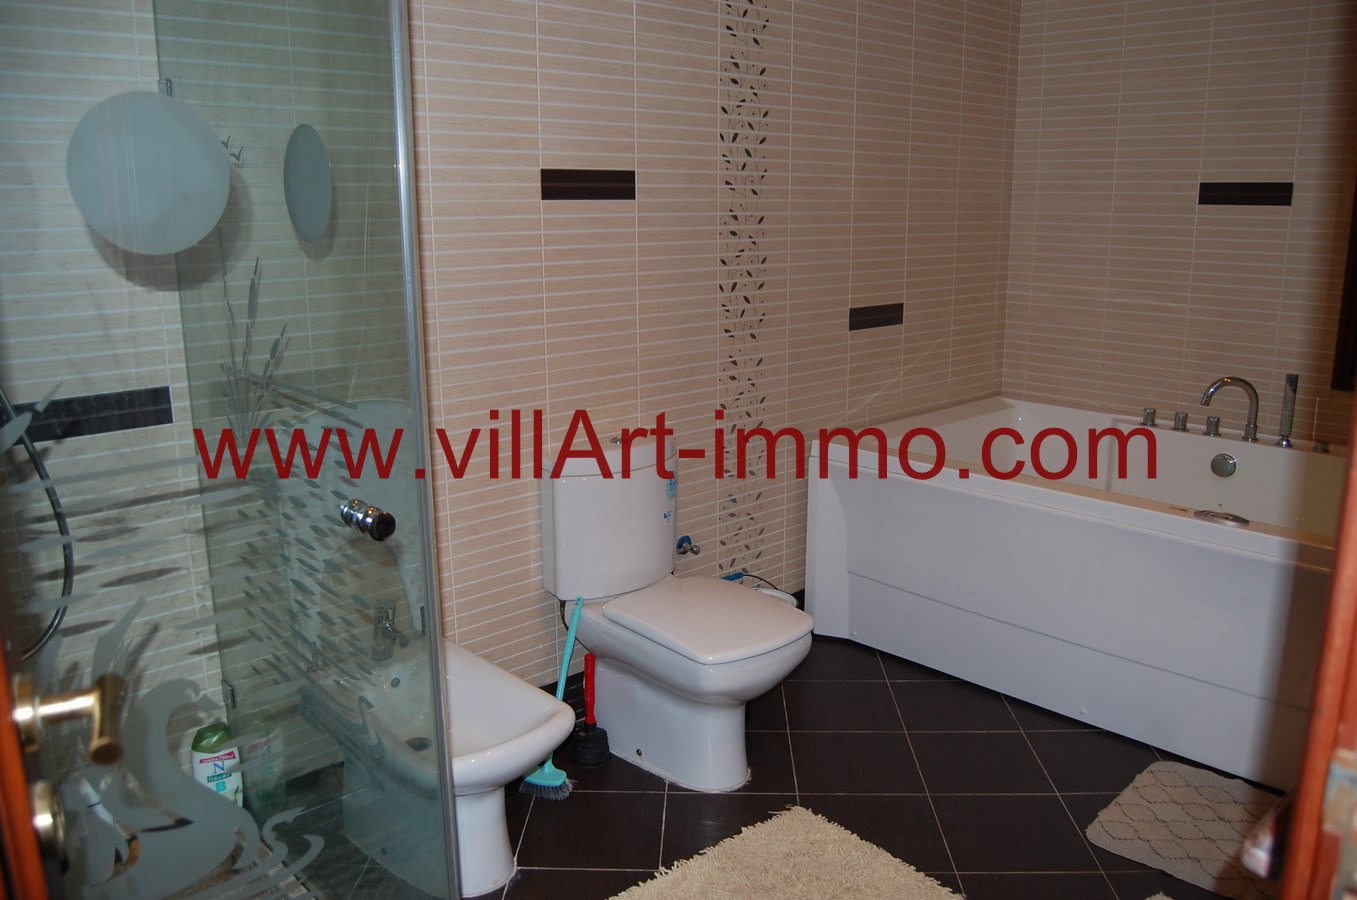 15-location-villa-meuble-tanger-salle-de-bain-2-lv851-villart-immo